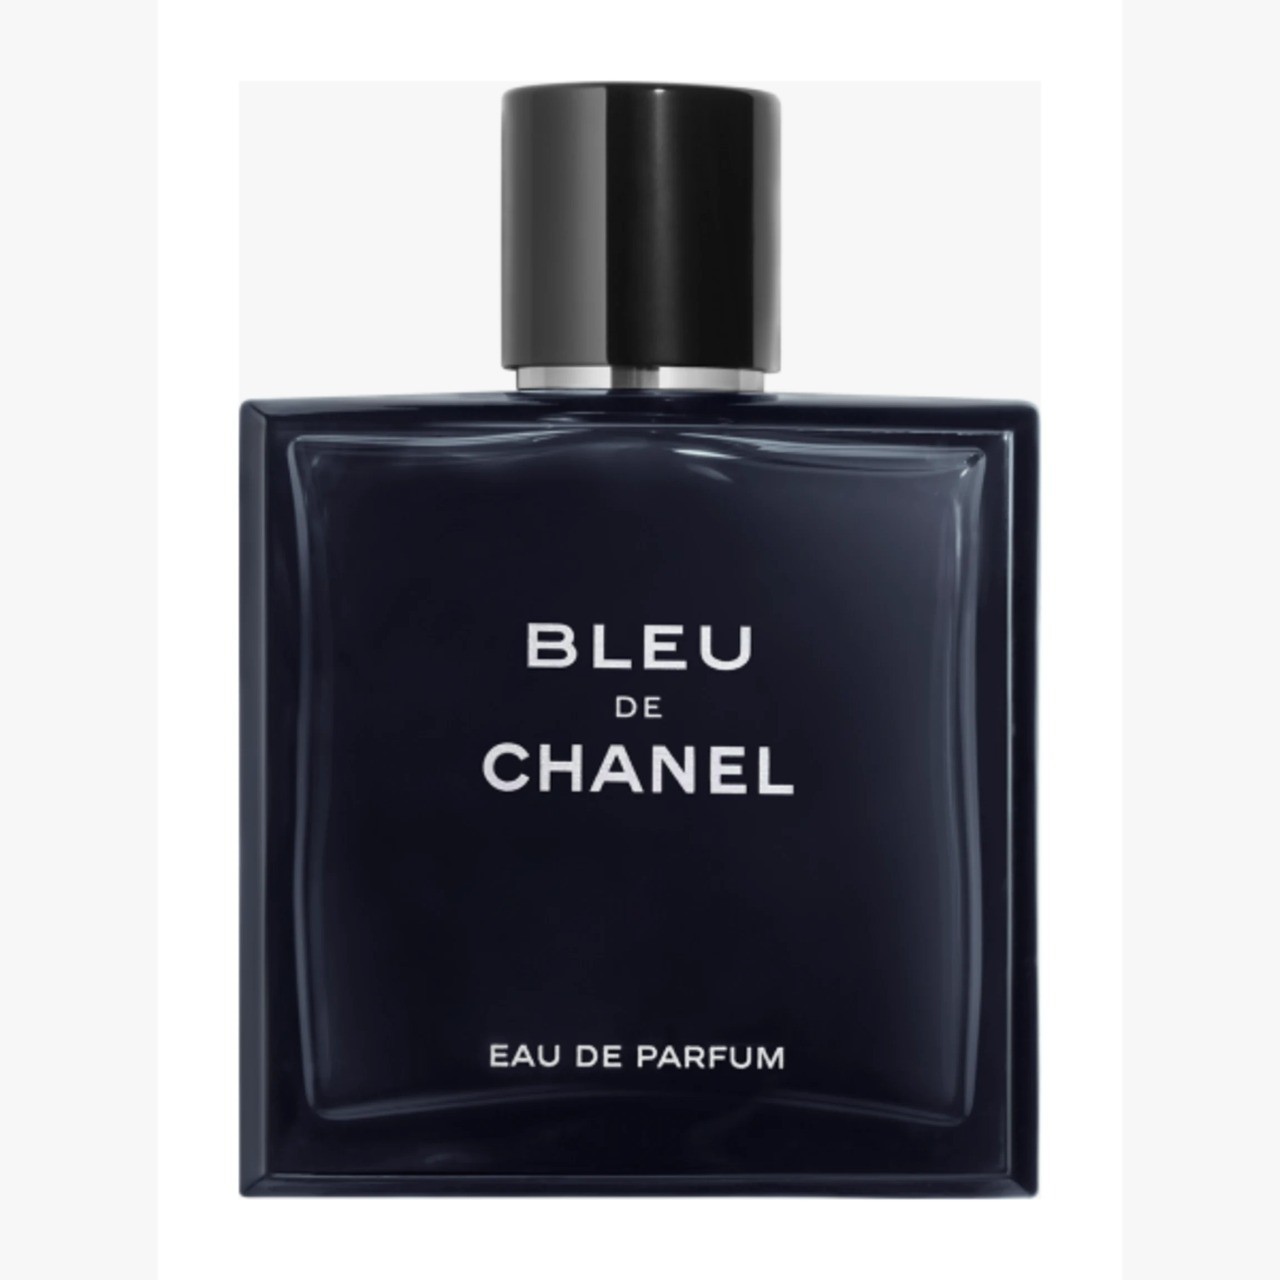 W004 Vocal Performance Eau De Parfum For Women Inspired by Chanel Coco – Vocal  Fragrances